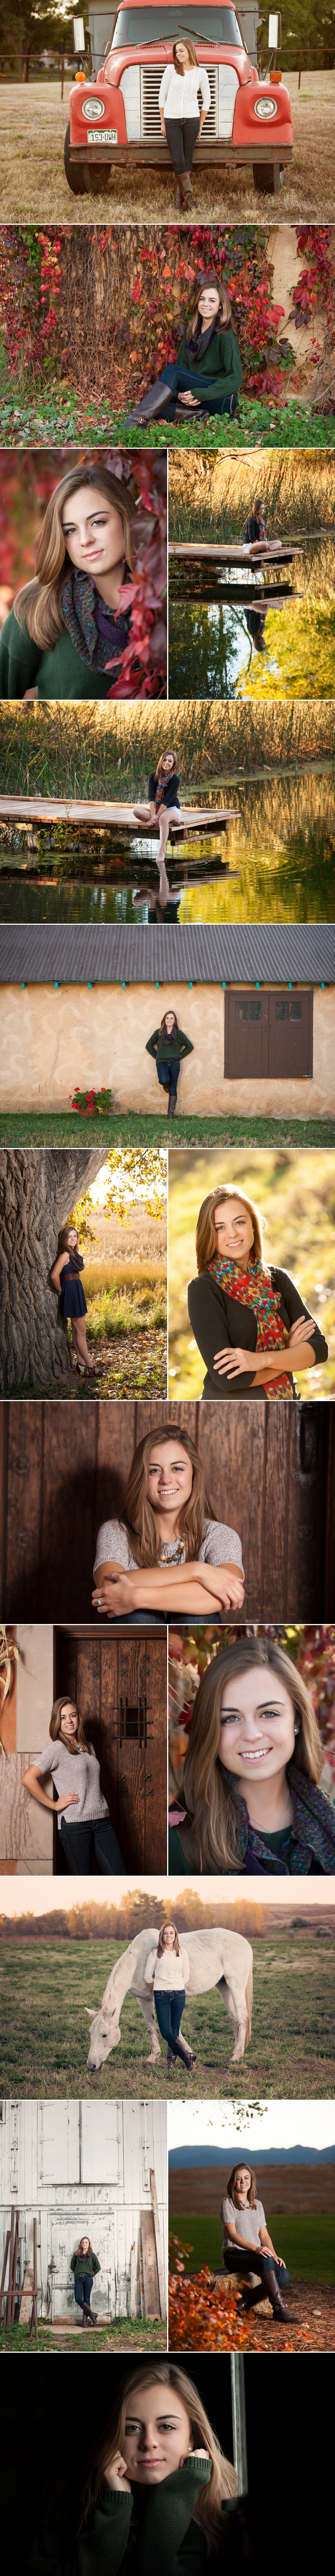 Colorado Springs High School Senior Pictures-Jonathan Betz Photography